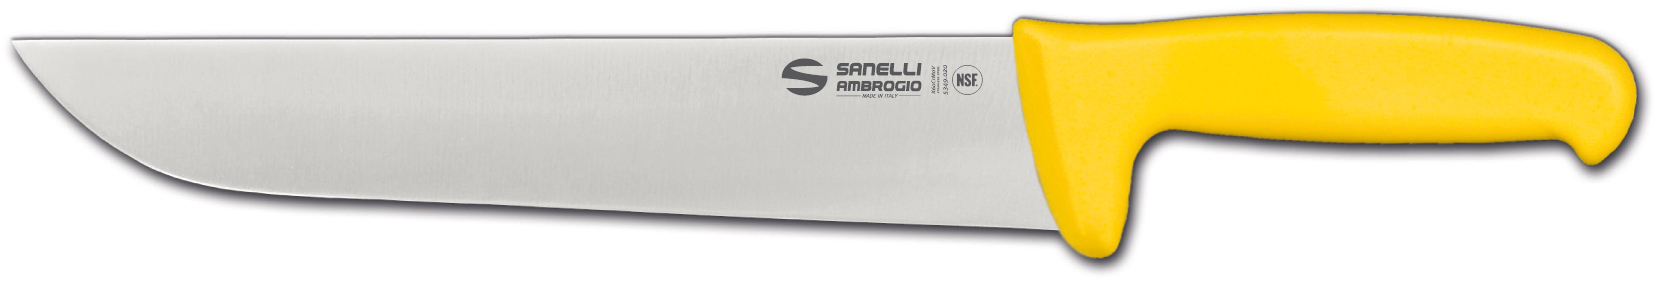 S309.026Y SUPRA BUTCHER KNIFE YELLOW HANDLE 26CM LAMA SANELLI AMBROGIO